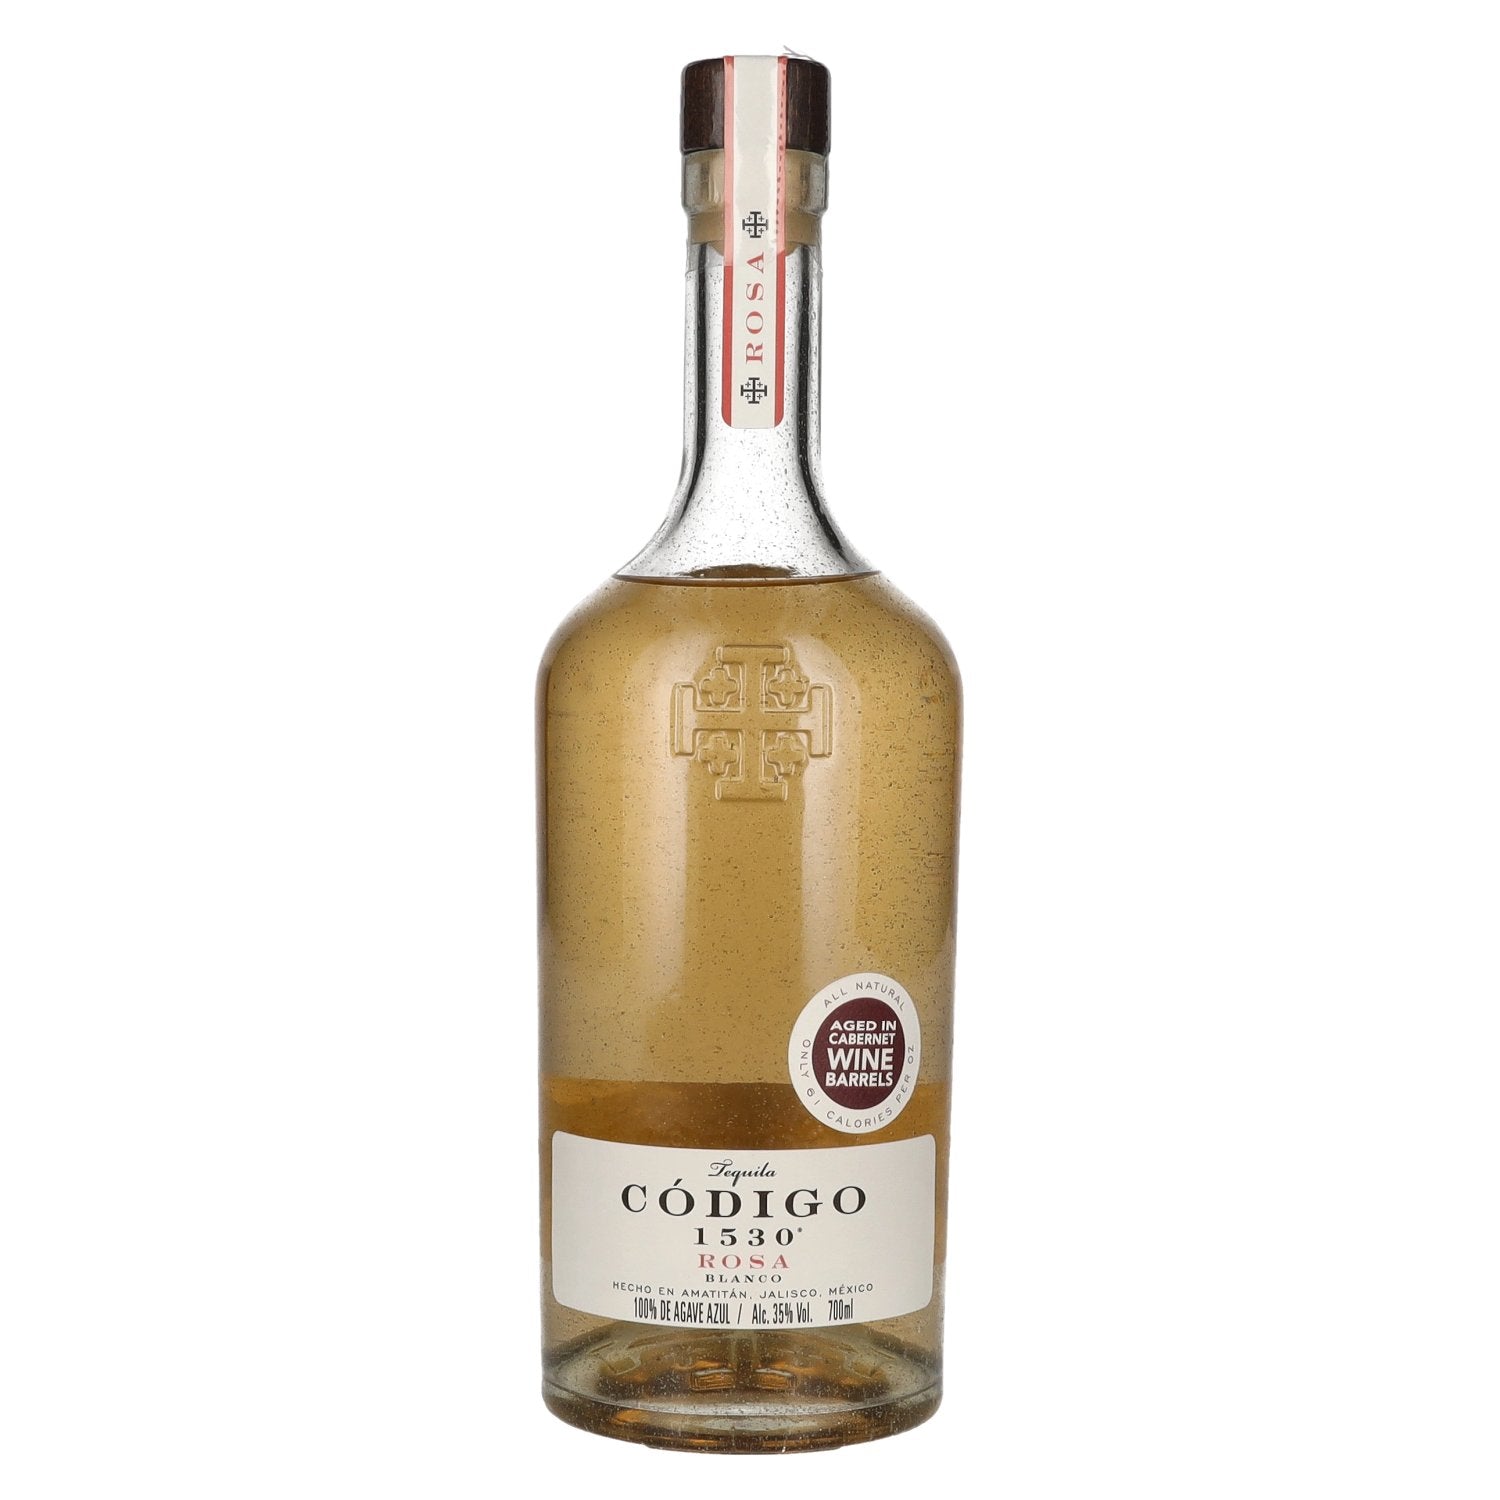 Codigo 1530 ROSA BLANCO Tequila 35% Vol. 0,7l